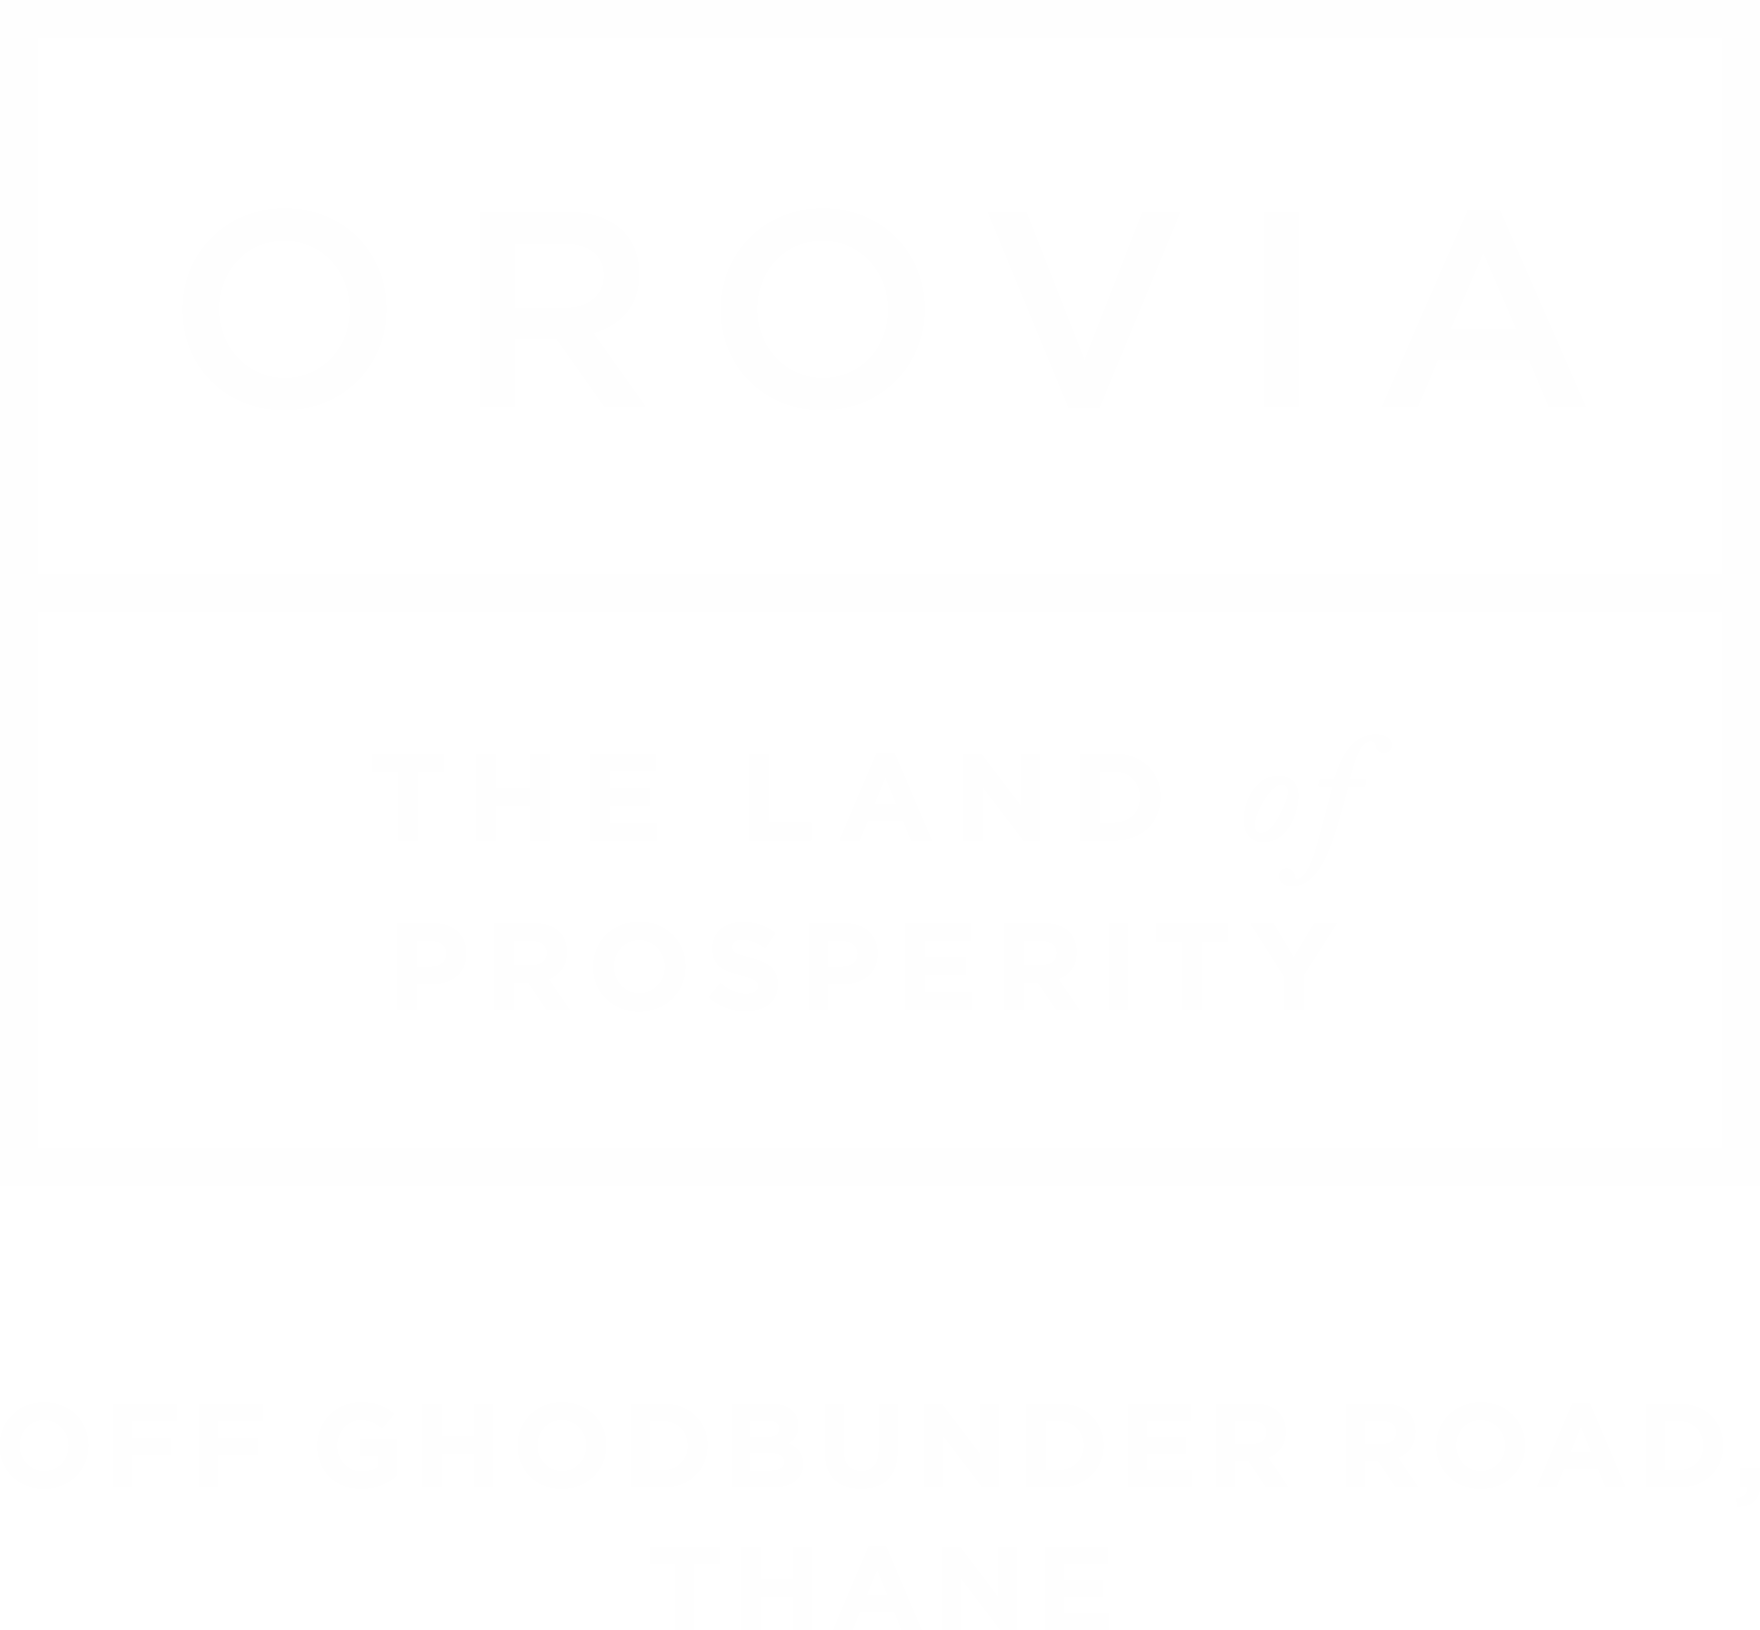 Orovia Phase 1 Ghodbunder Road Thane